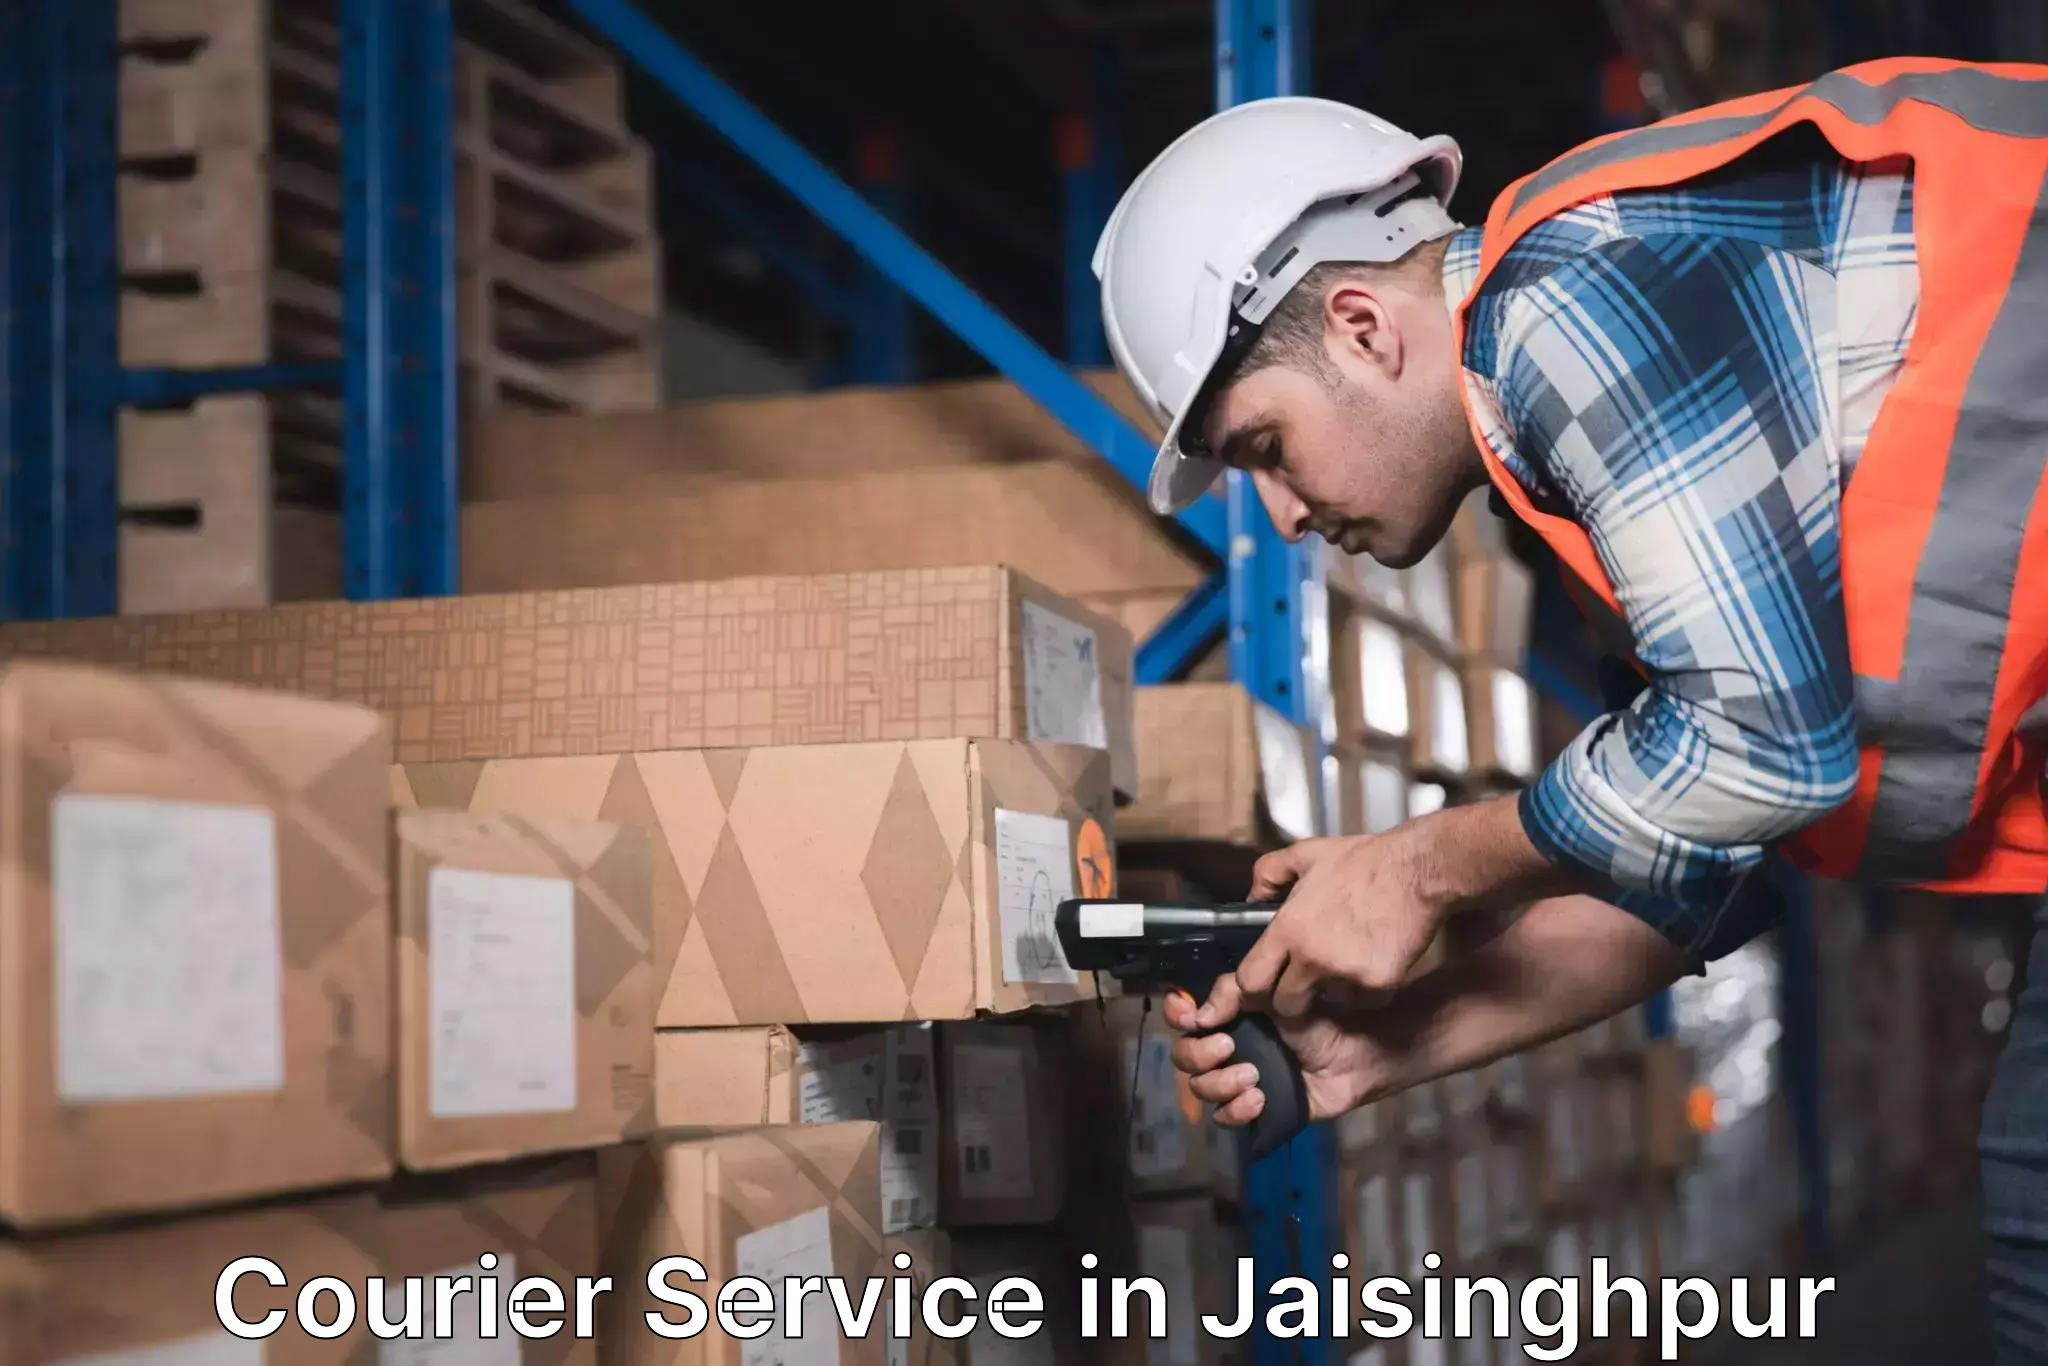 Streamlined shipping process in Jaisinghpur